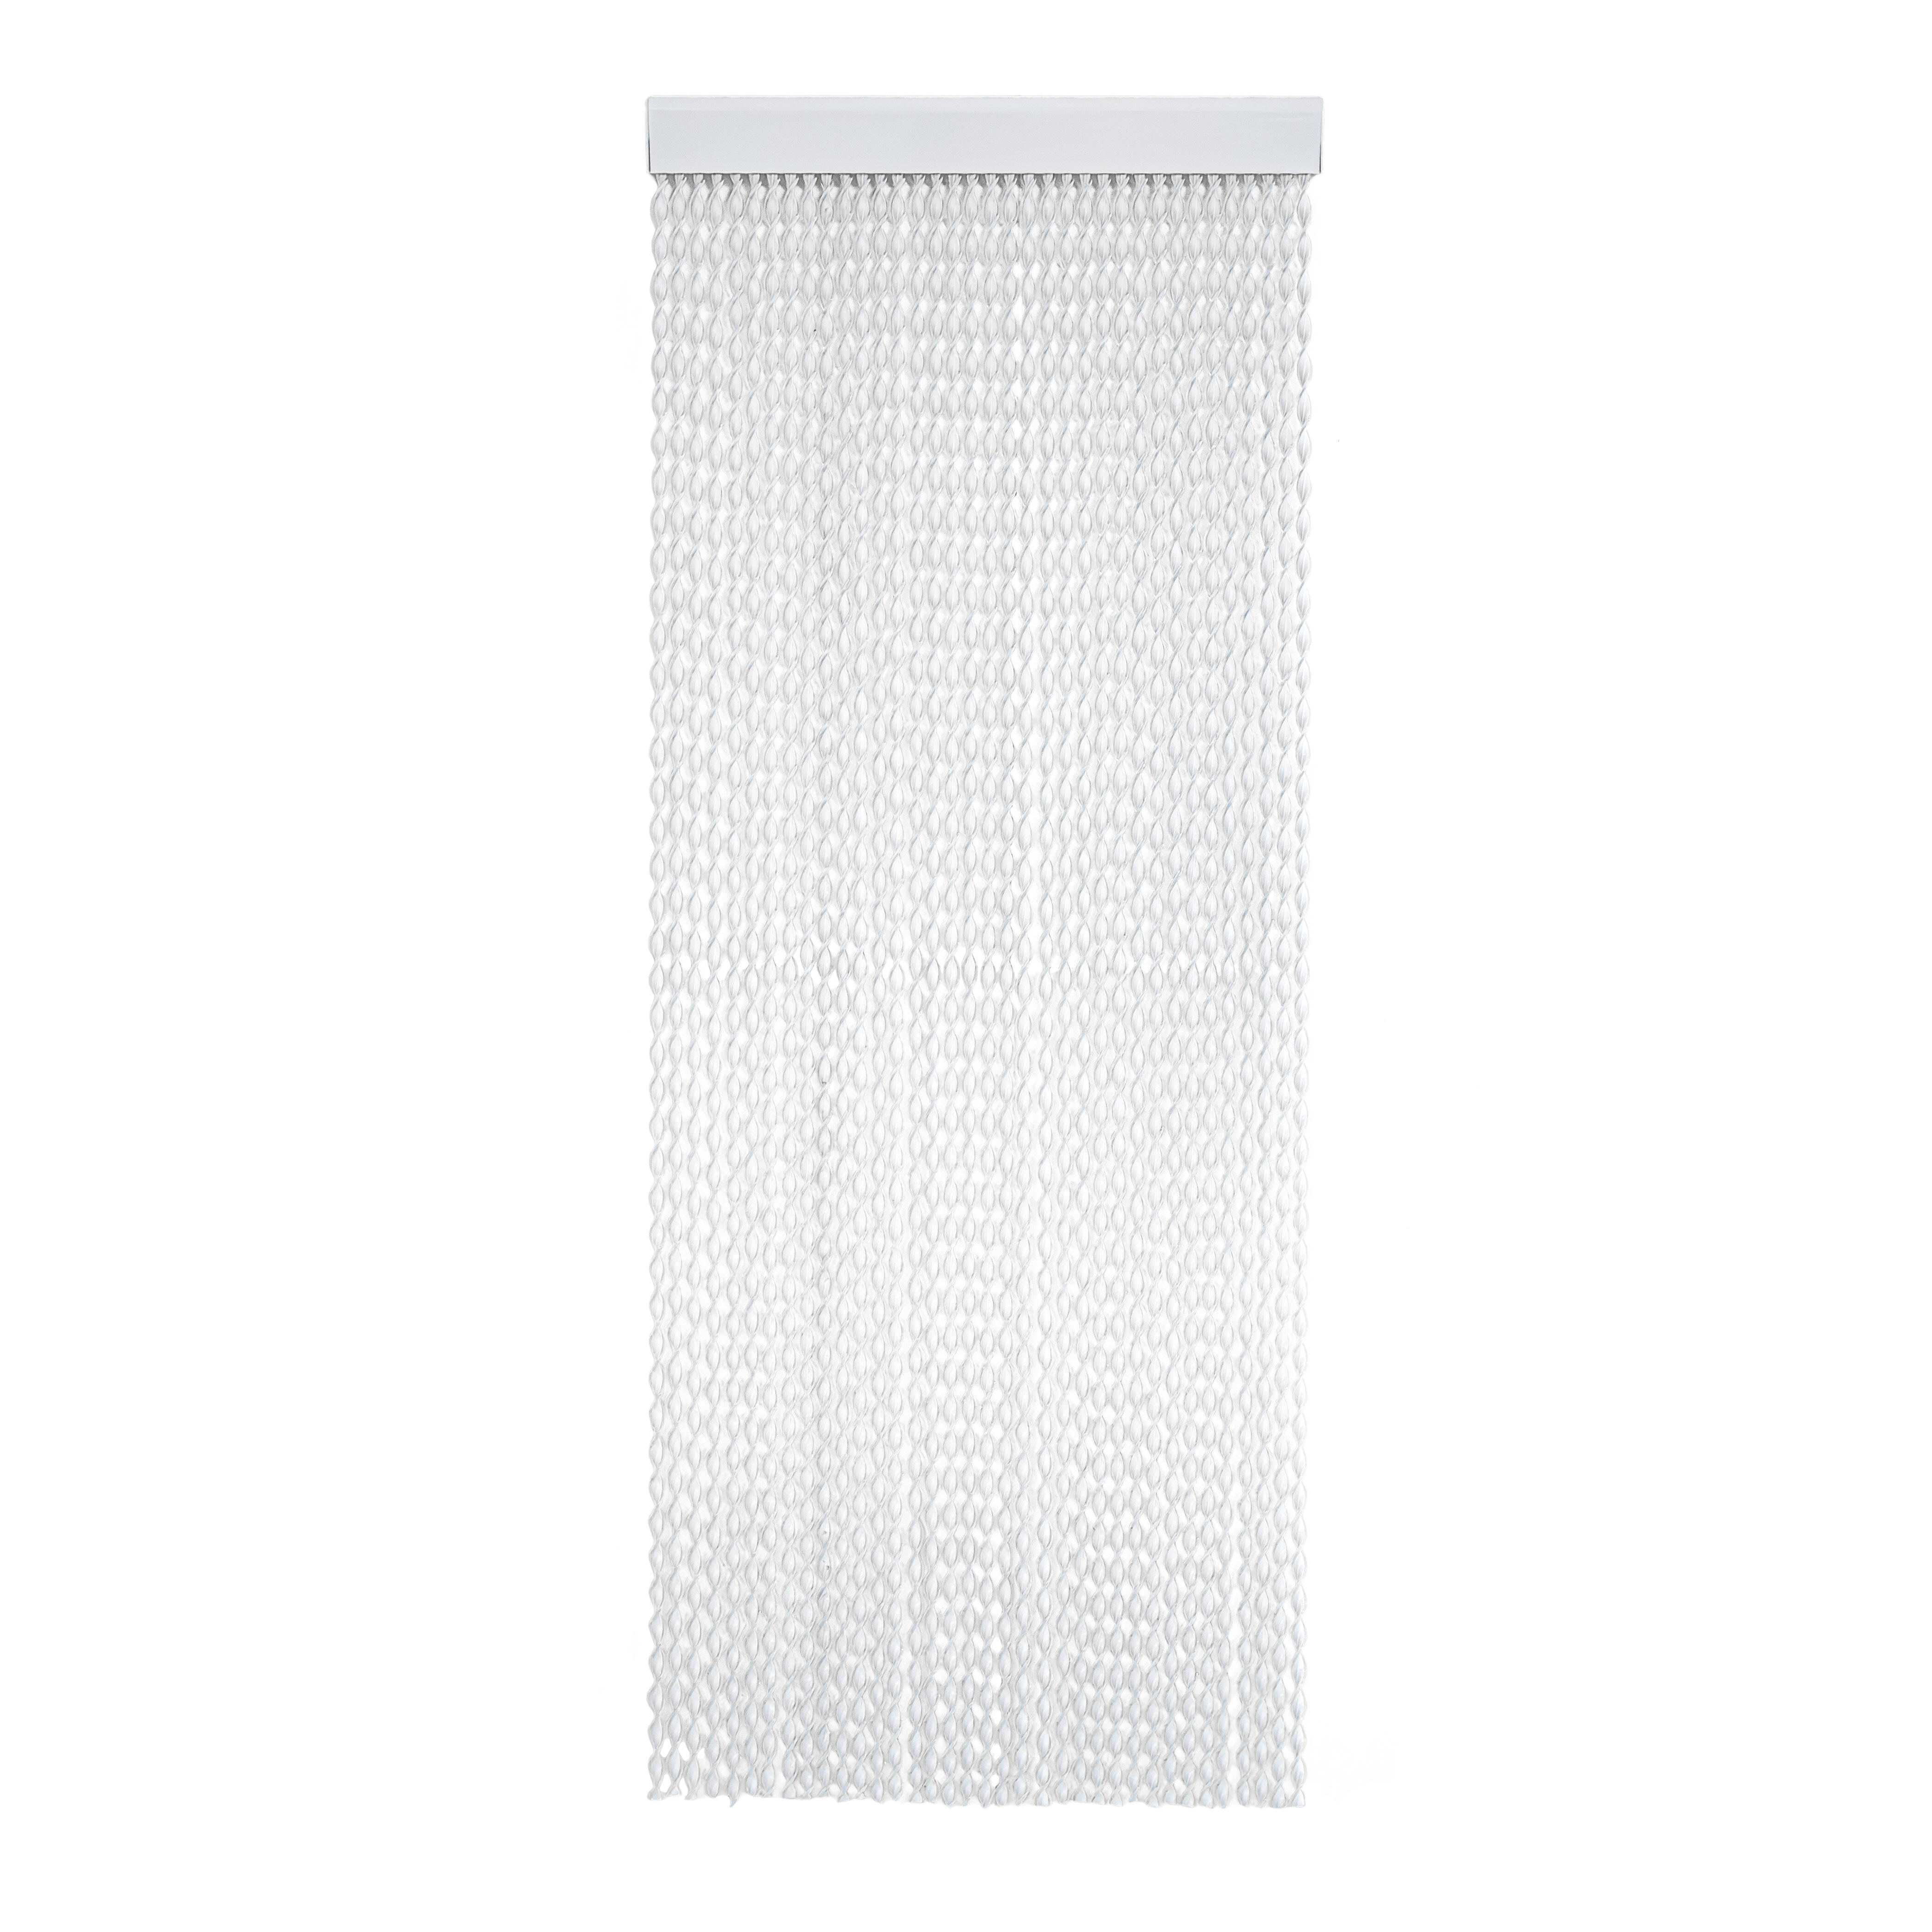 Cortina de puerta pvc enna blanca-transparente 120 x 210 cm